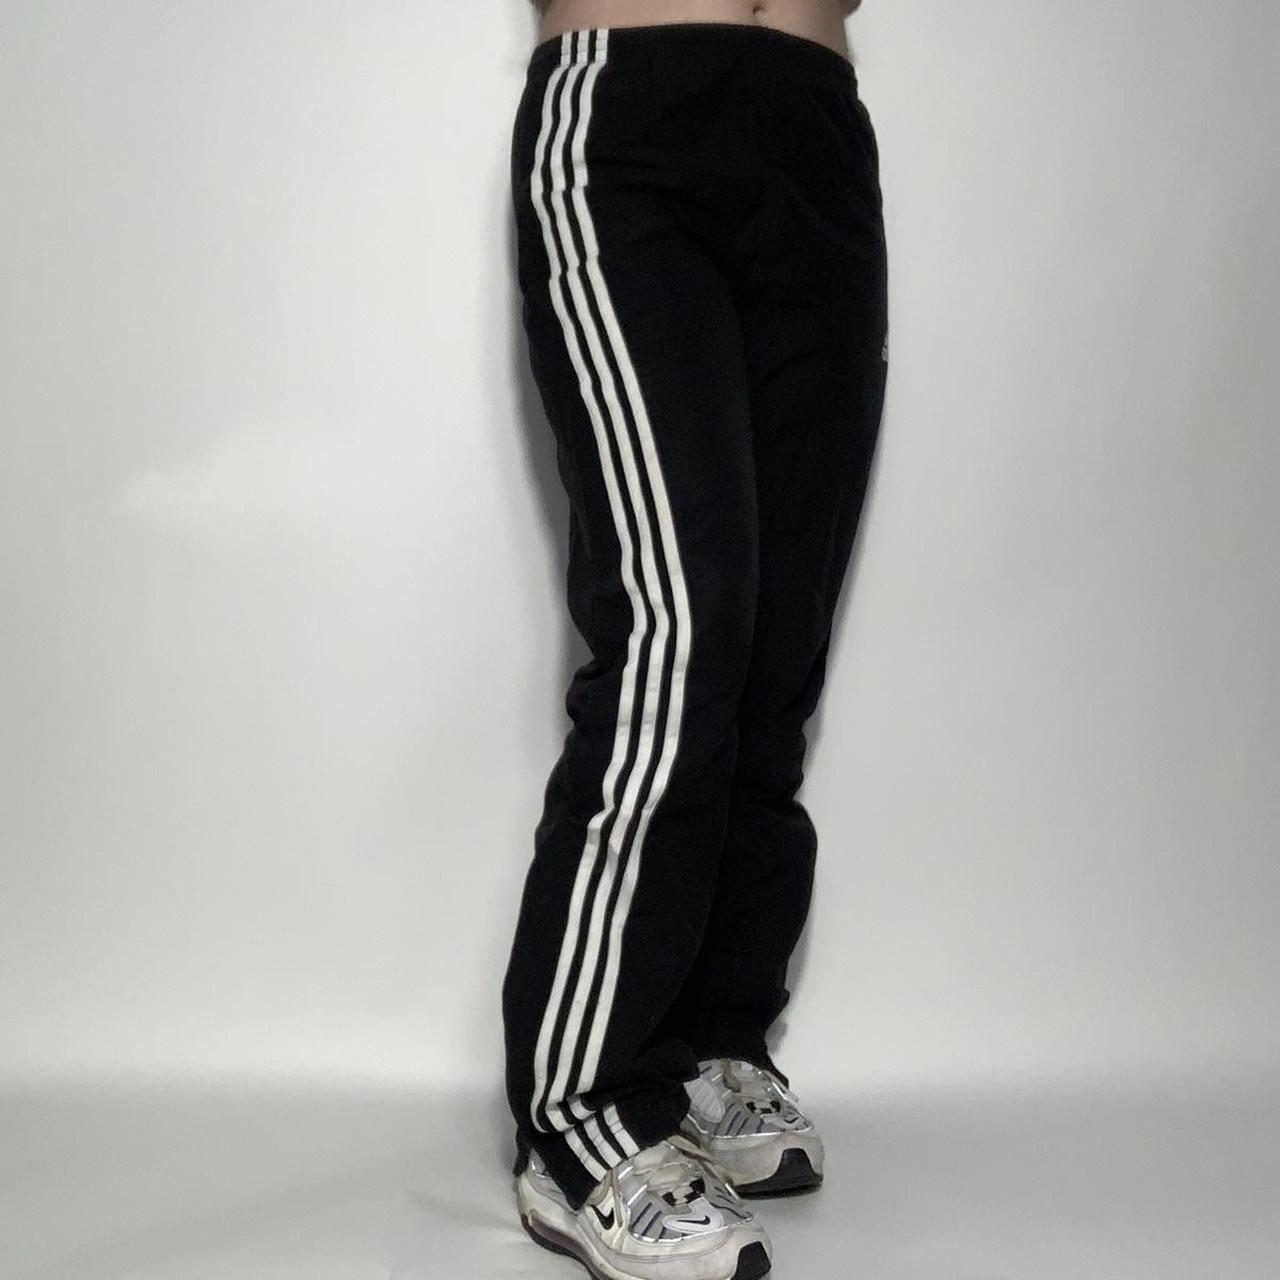 Vintage 90s Adidas unisex black and white baggy track pants Shapiro Selective